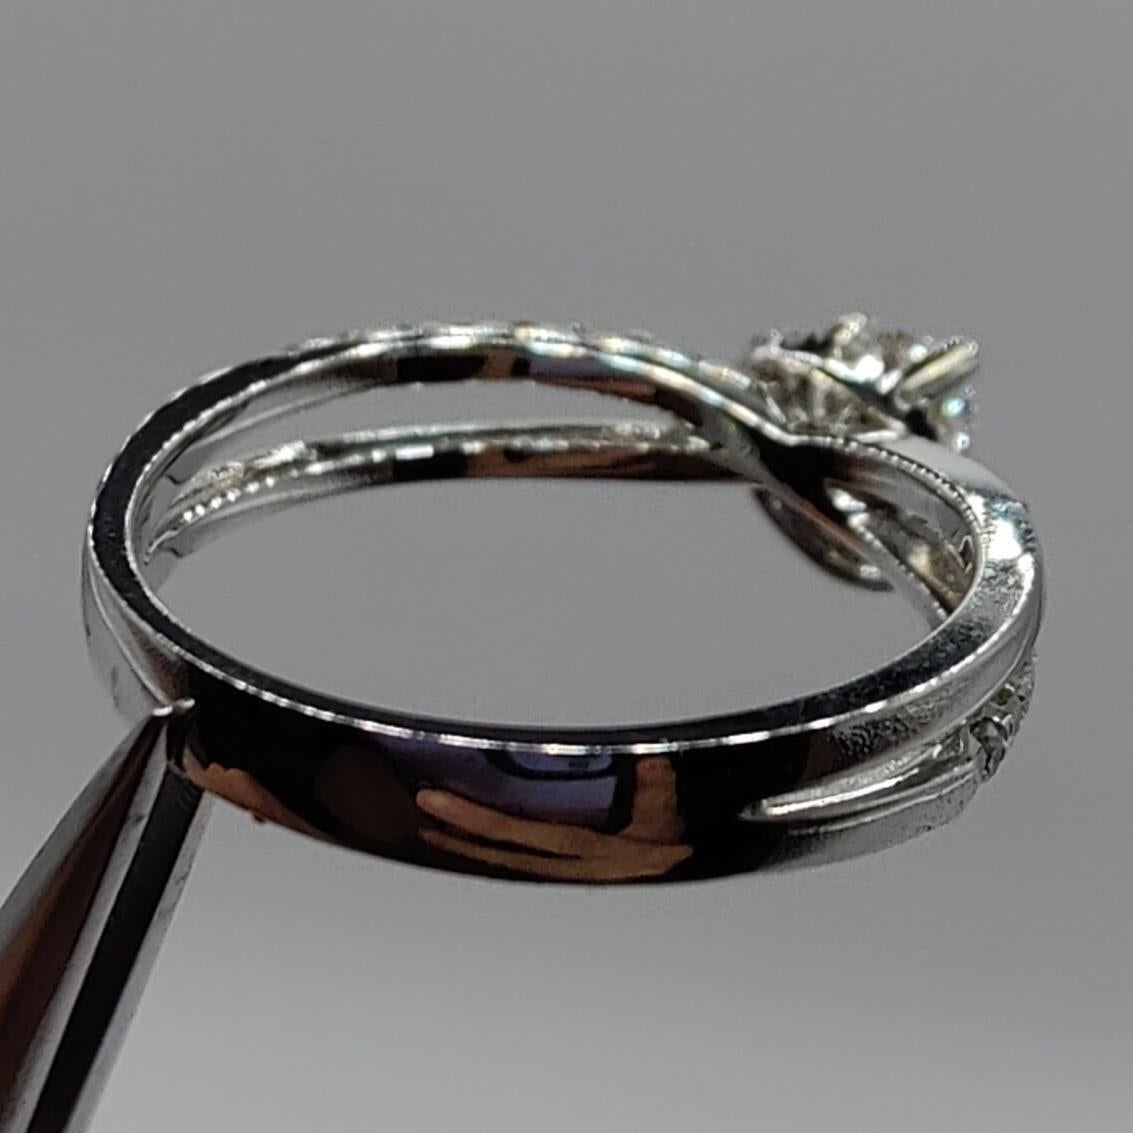 Hula Hoop .58 Carat Diamond Ring in 18K White Gold For Sale 1